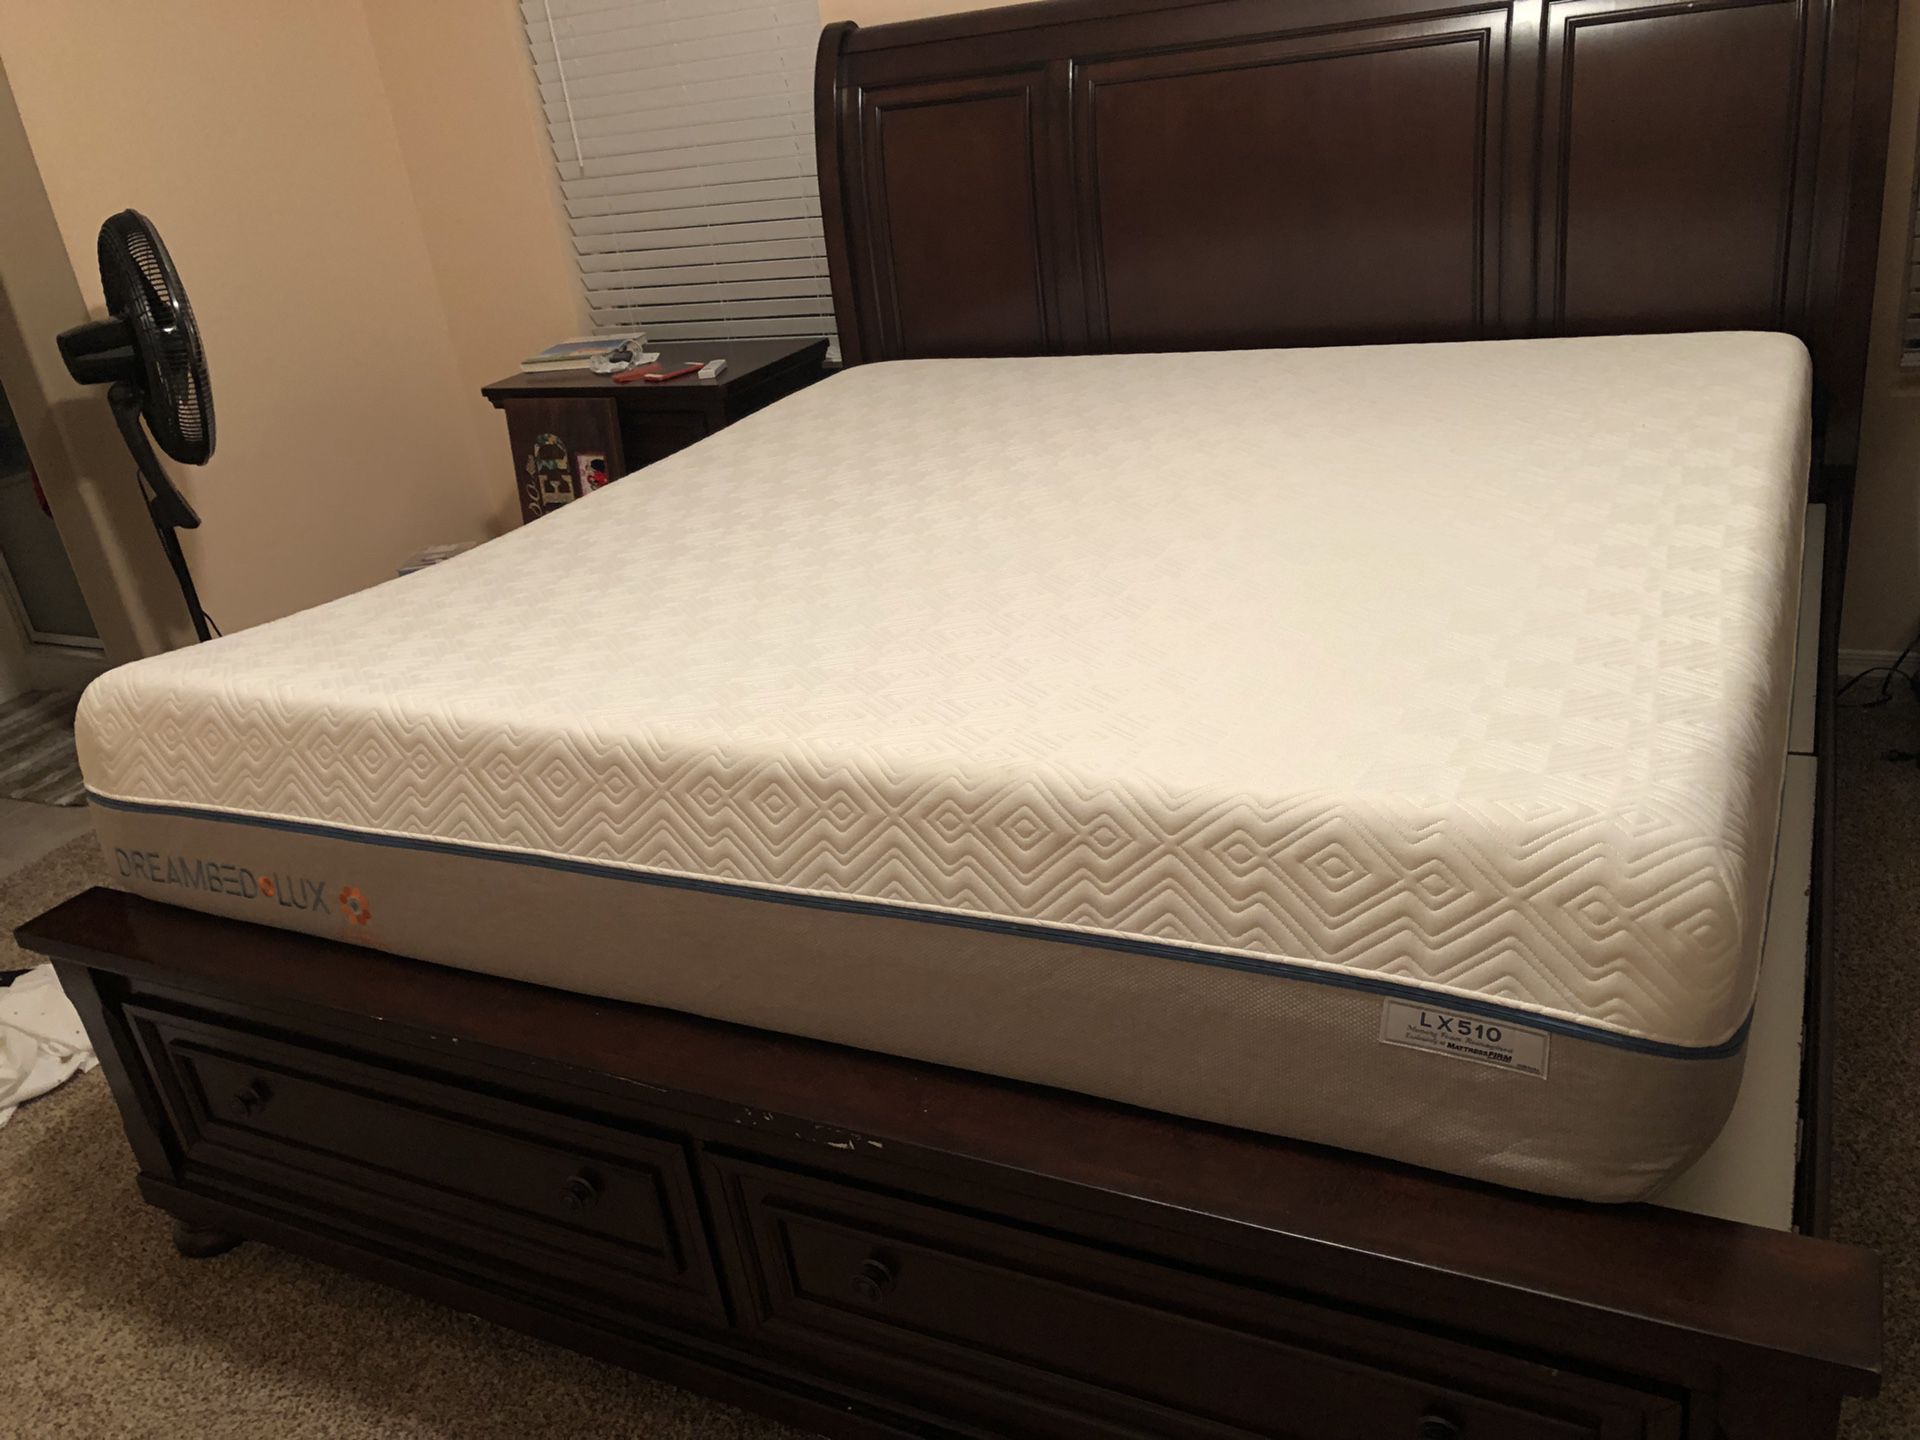 dream bed lux lx510 mattress price